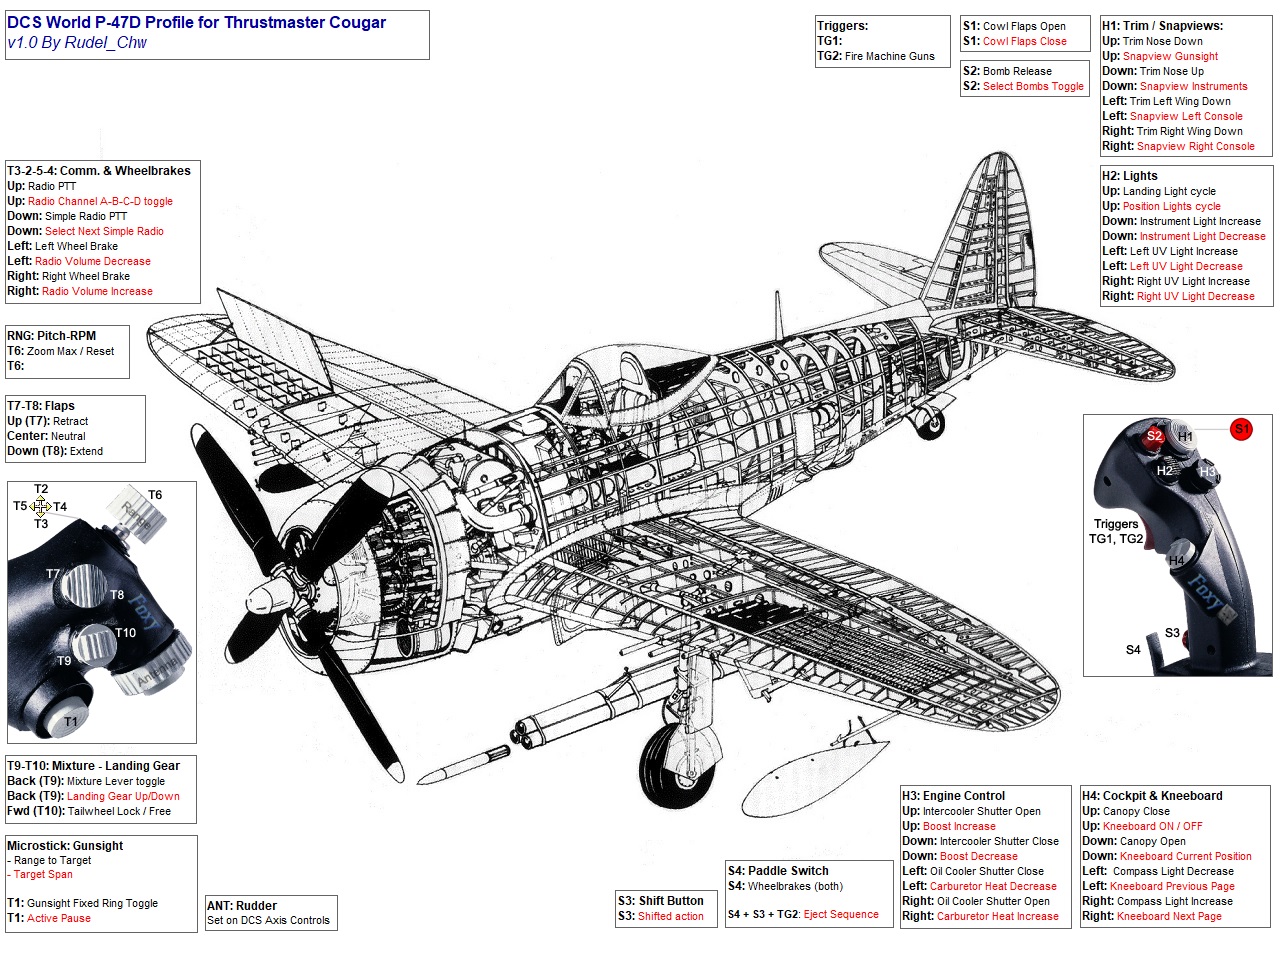 TM Hotas Cougar profile for DCS P-47D